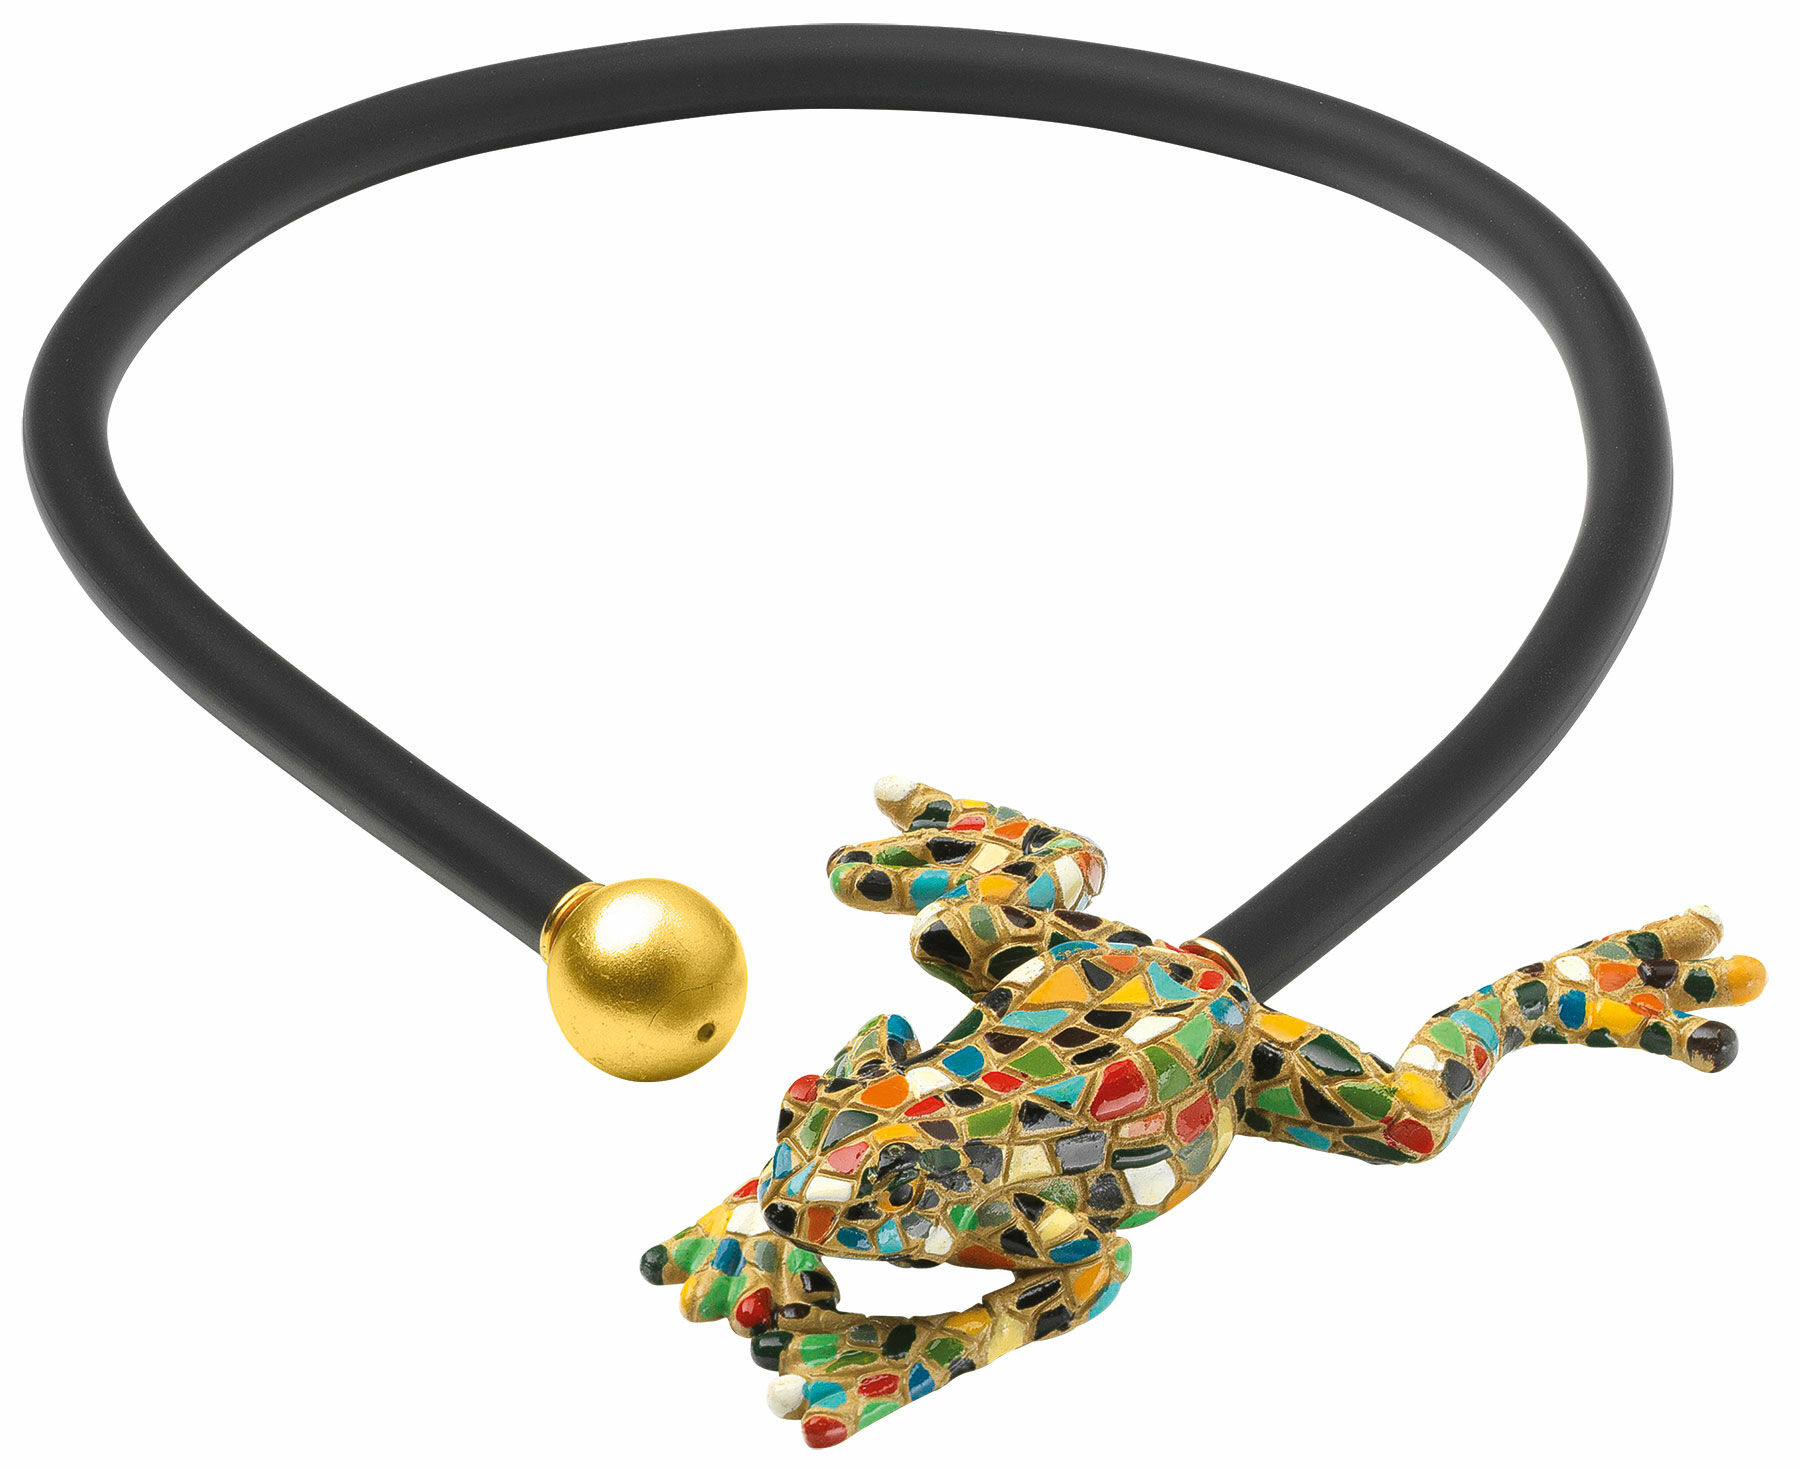 Necklace "Mosaic Frog" by Anna Mütz